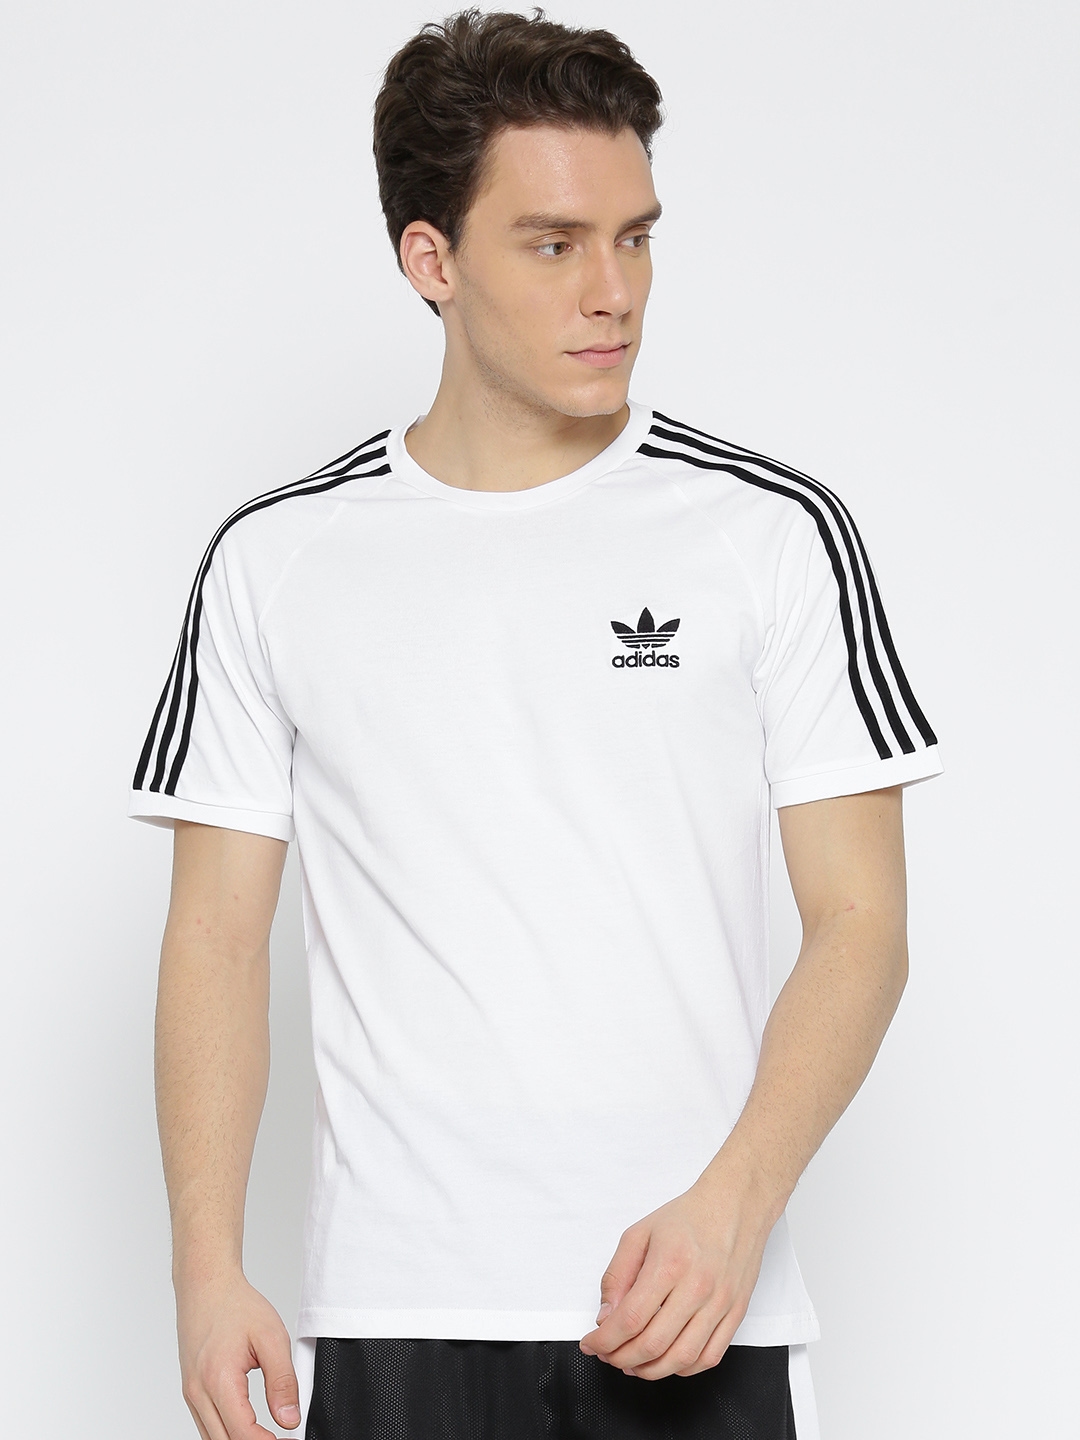 Buy ADIDAS Originals Men White 3 Stripes Round Neck T - Tshirts for Men 2450823 |